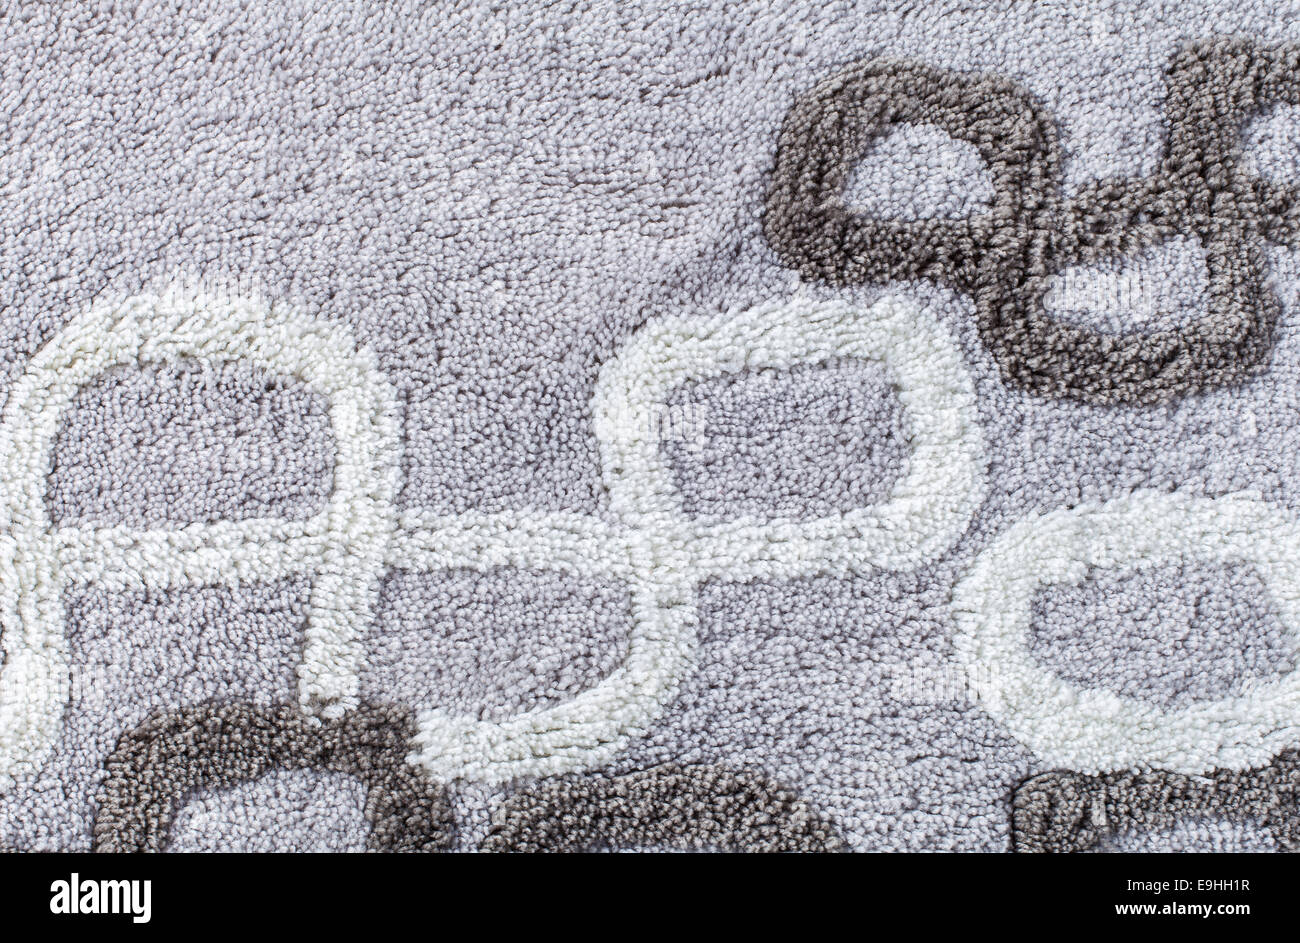 Close up of gray carpet texture Stock Photo